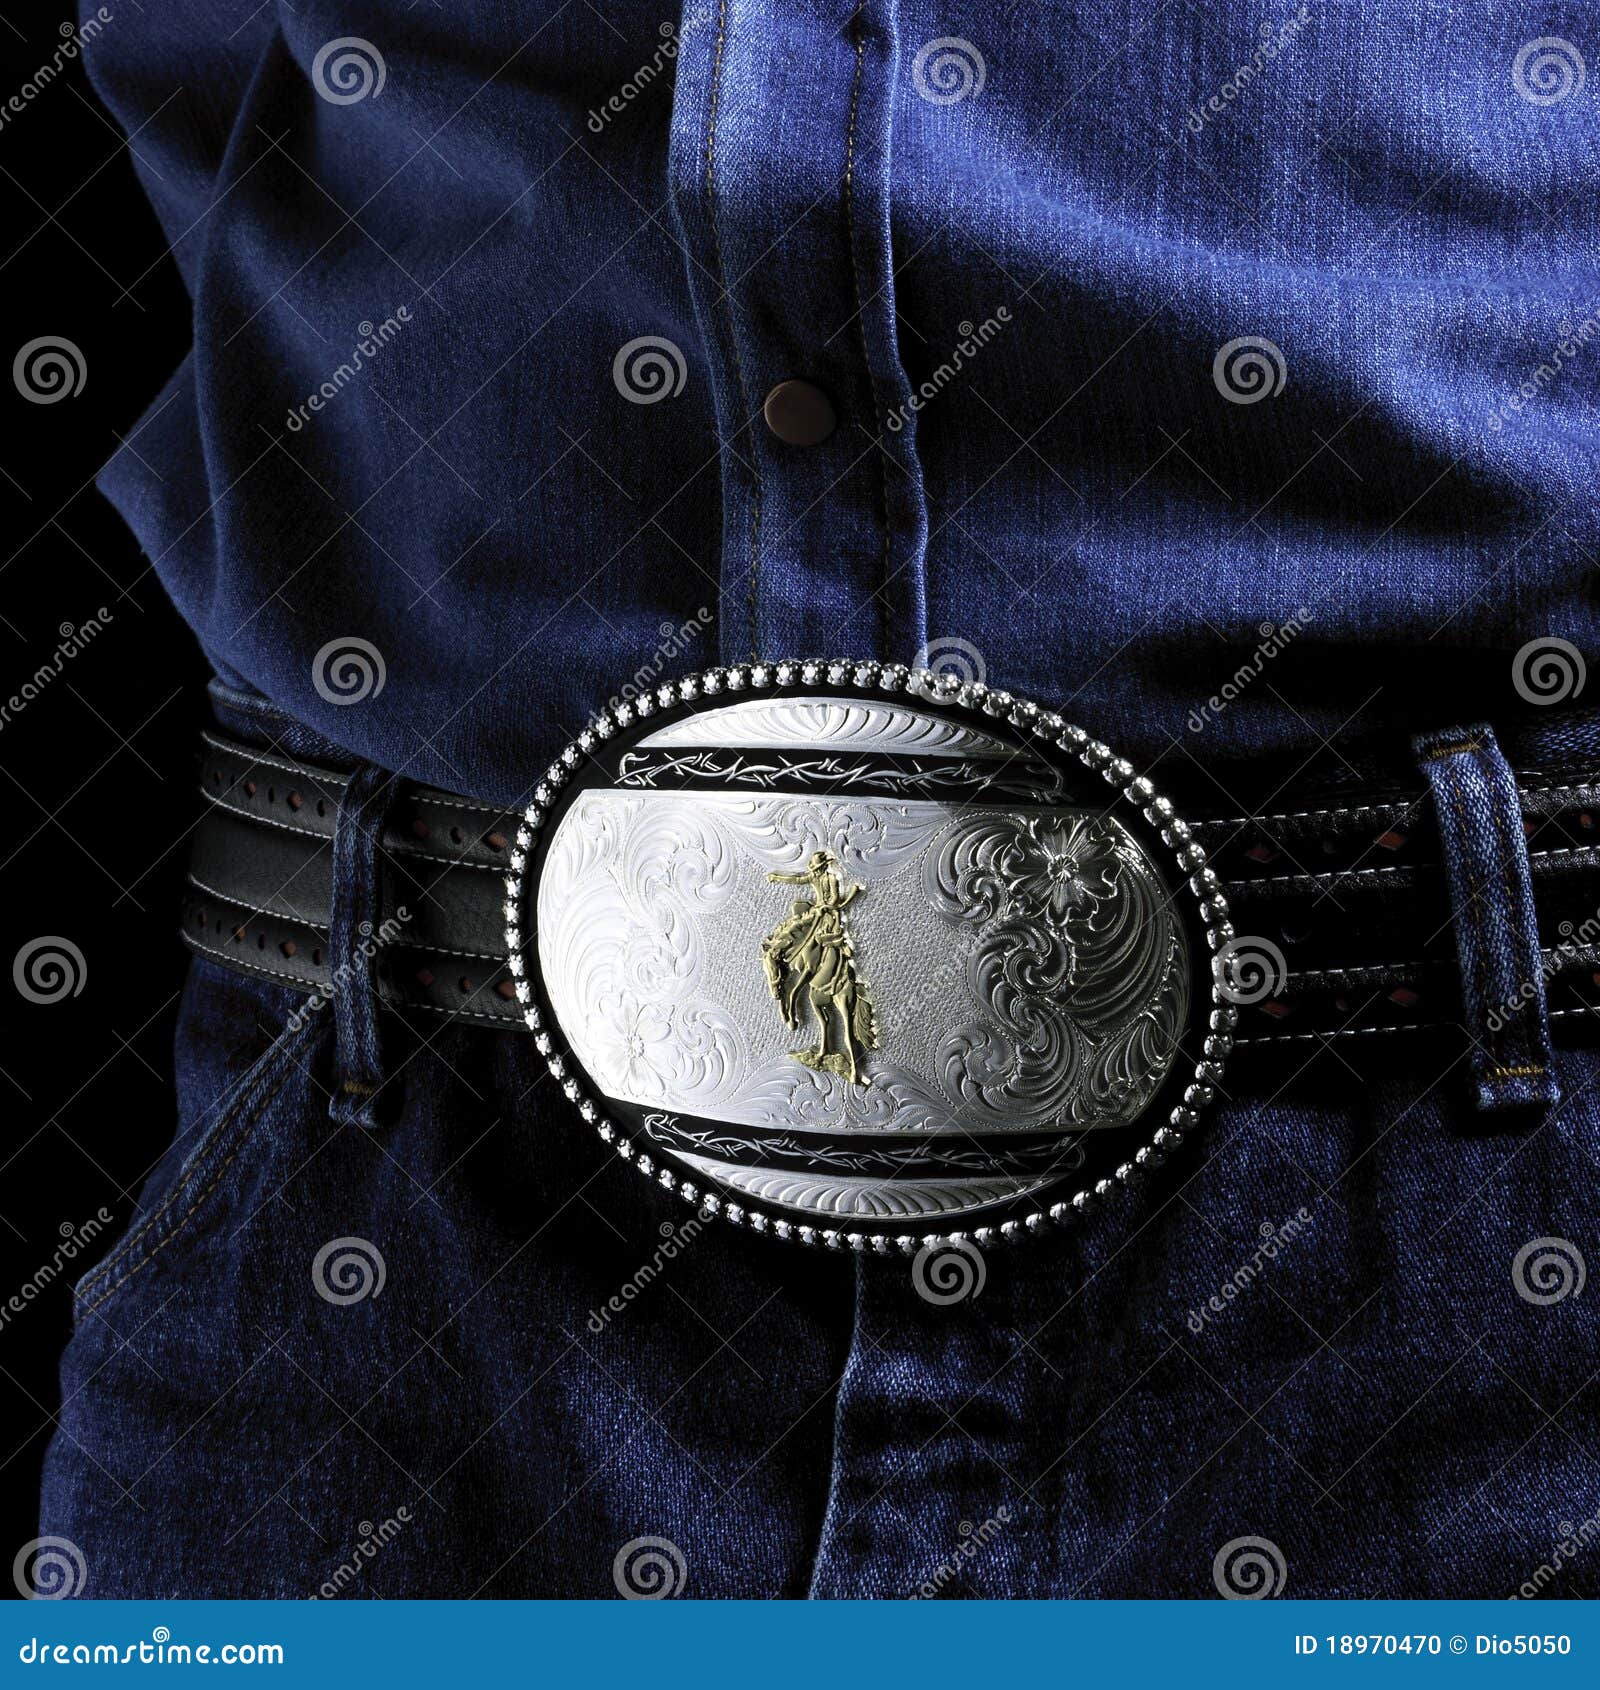 Belt buckle stock photo. Image of buckle, belt, blue - 18970470